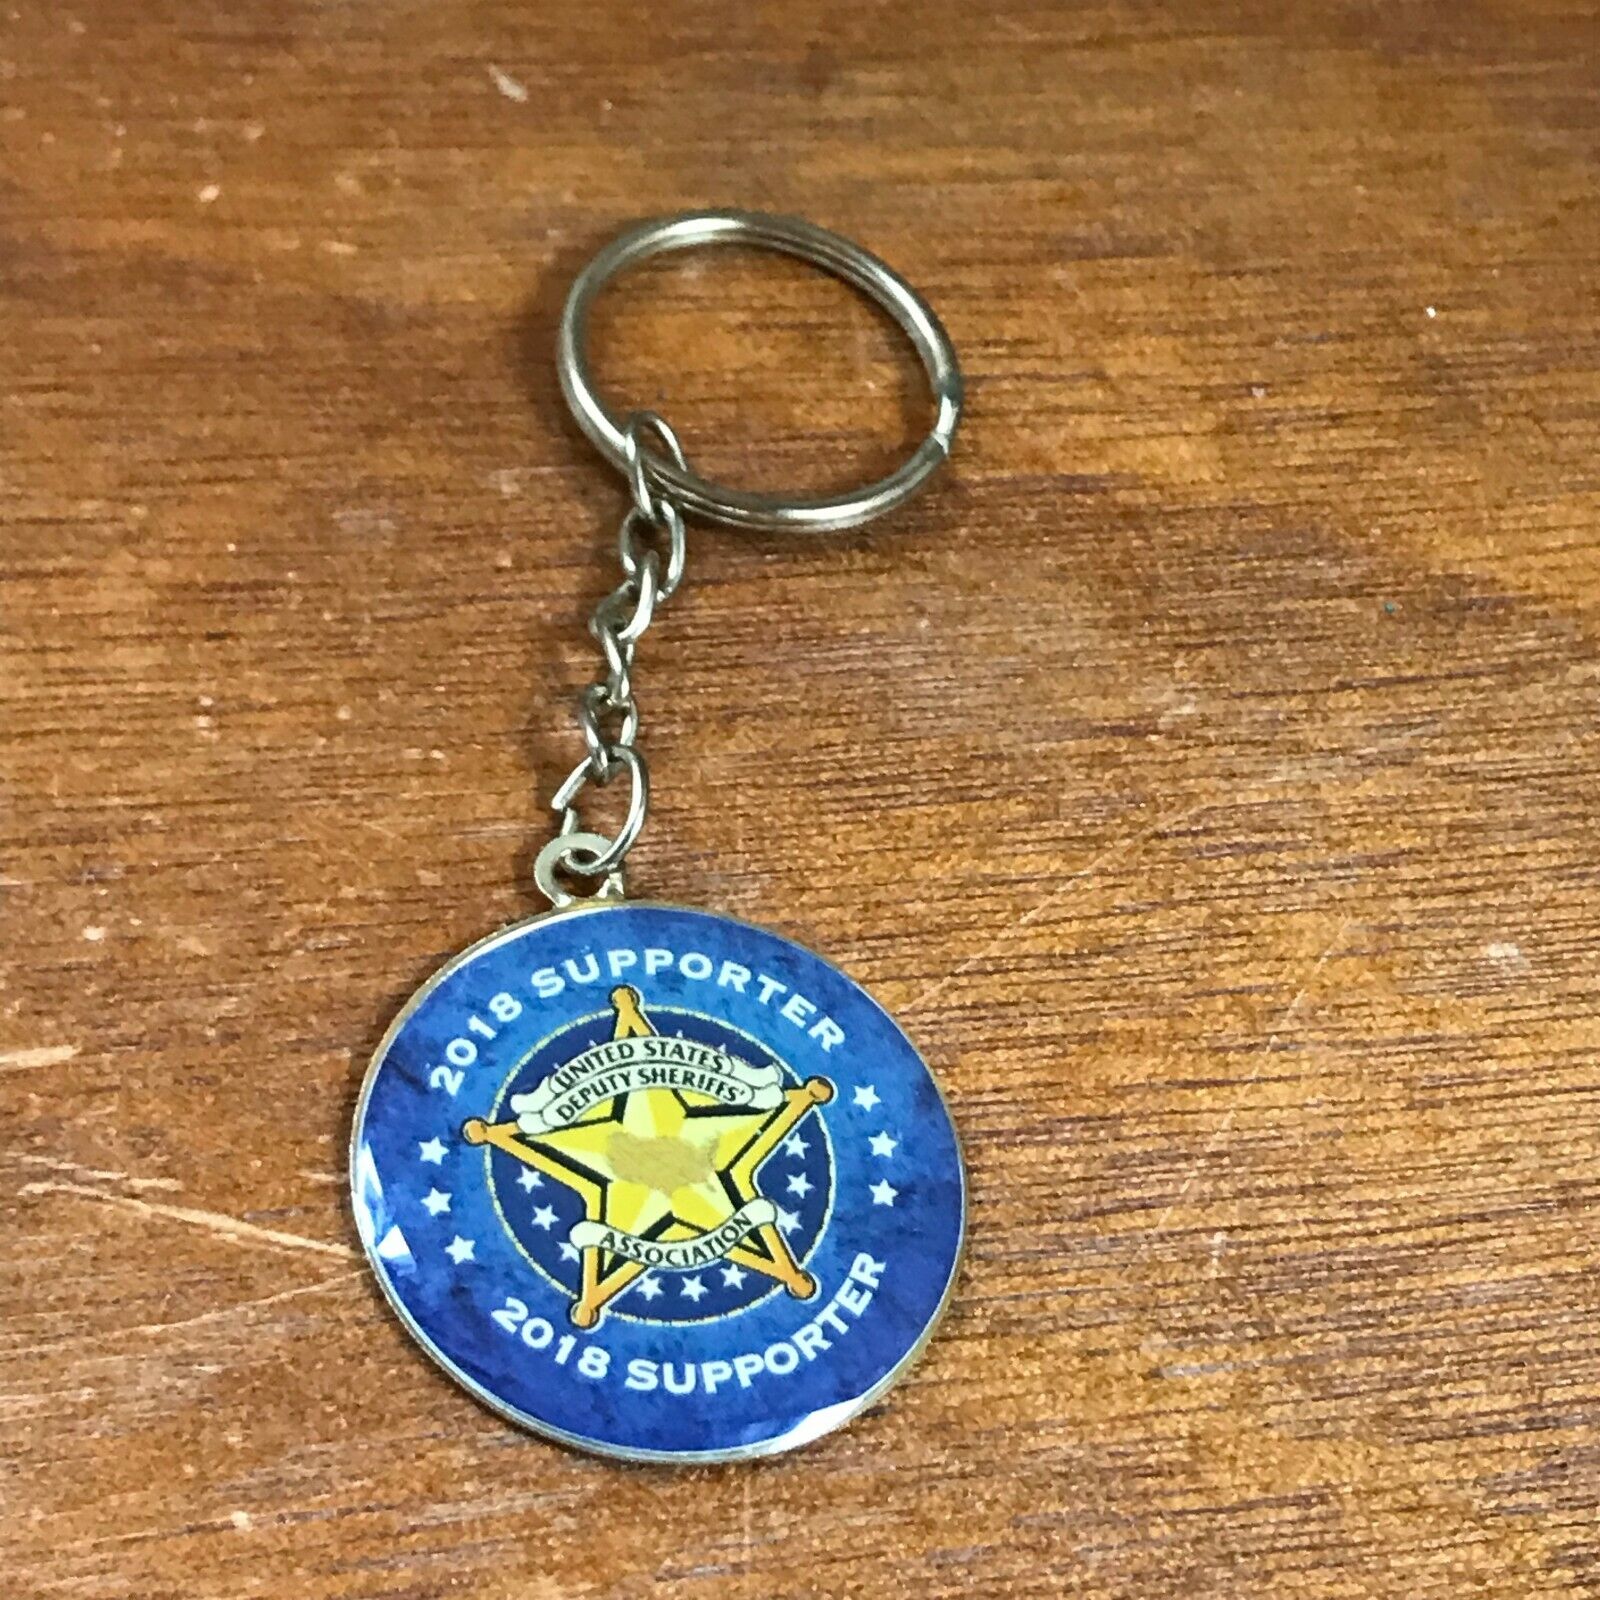 2018 Supporter United States Deputy Sheriff’s Association Goldtone Key Chain  – 